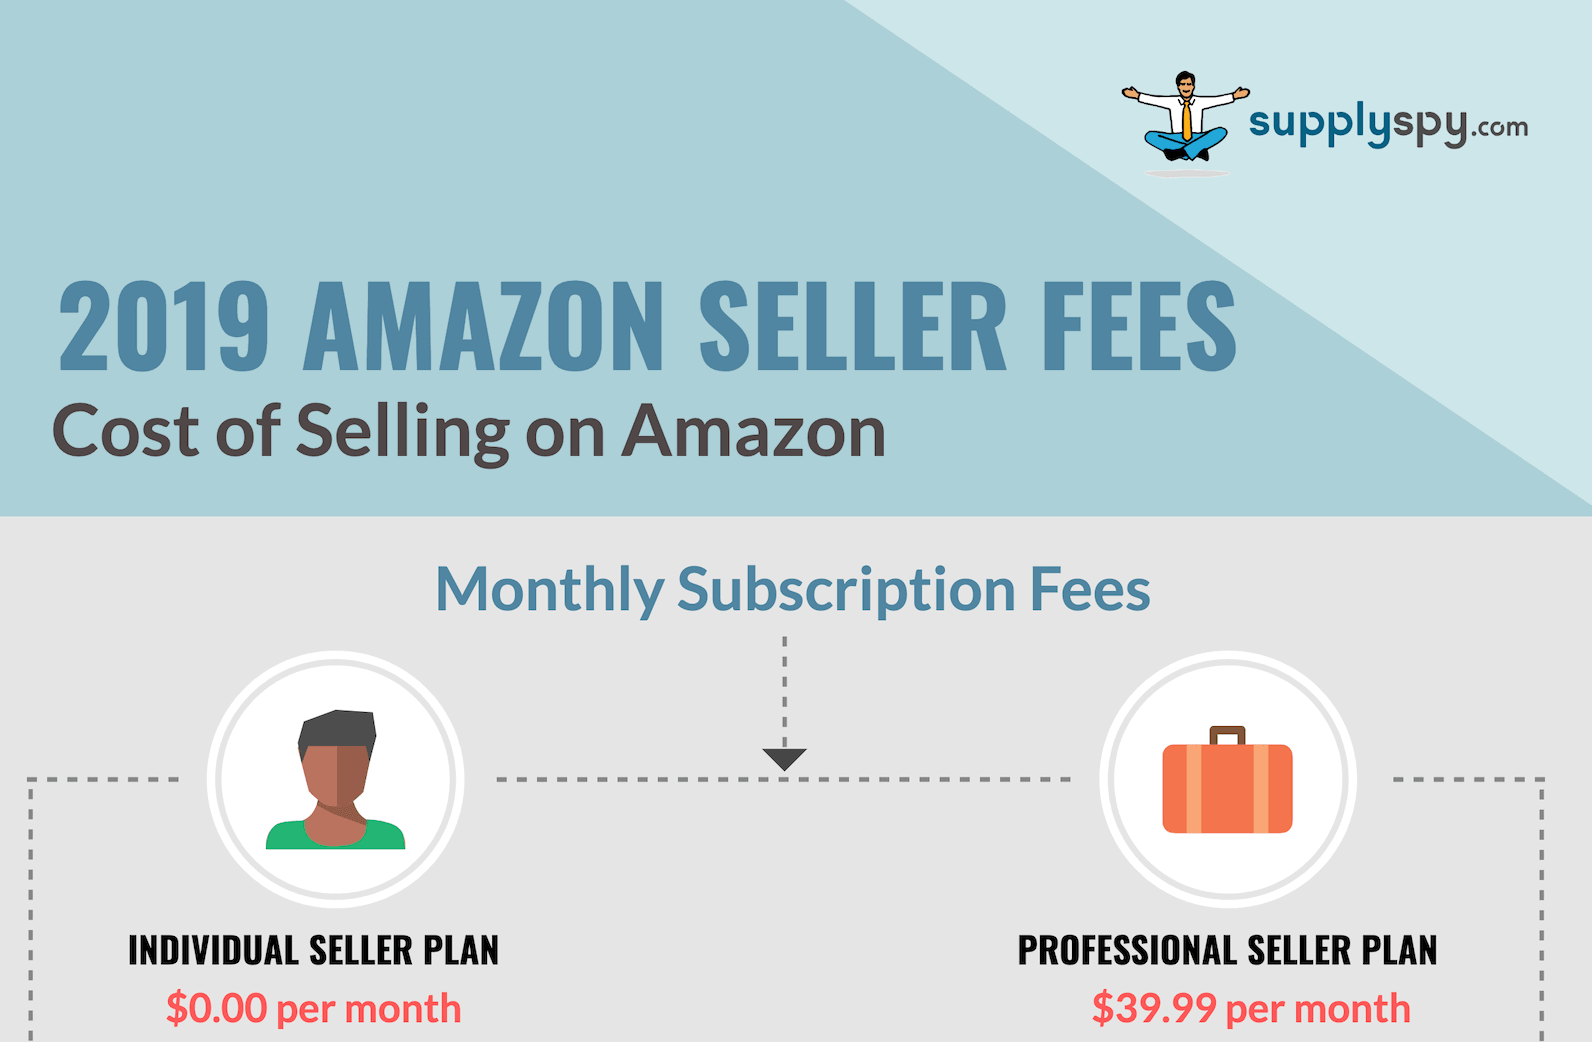 Amazon Seller Fees 2019